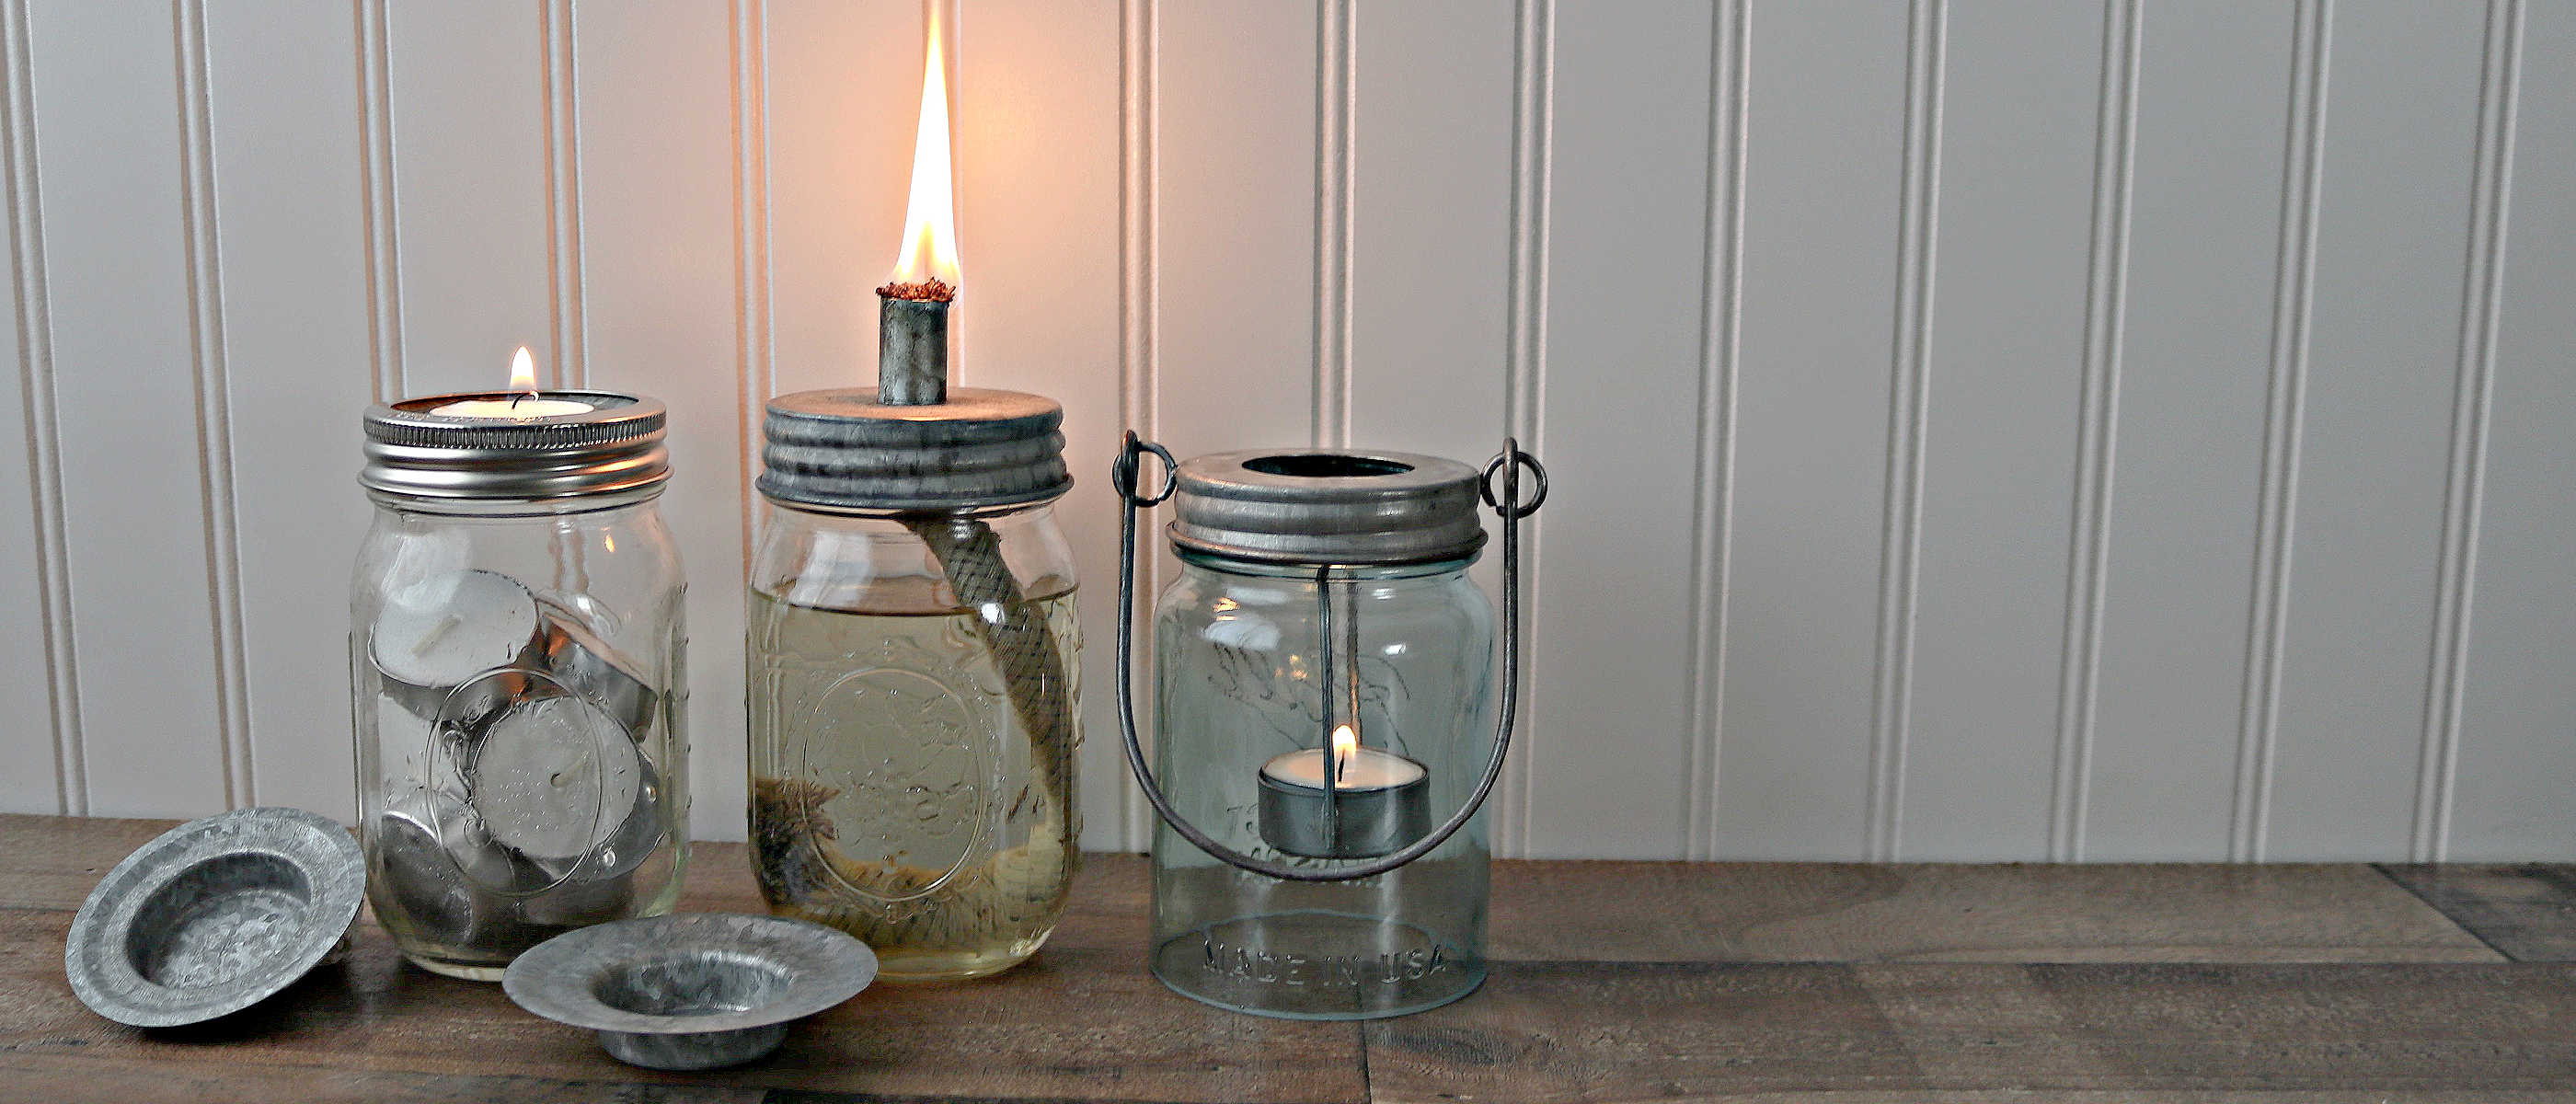 regular mouth galvanized tea light holder insert, tiki torch lamp lid, and tea light holder